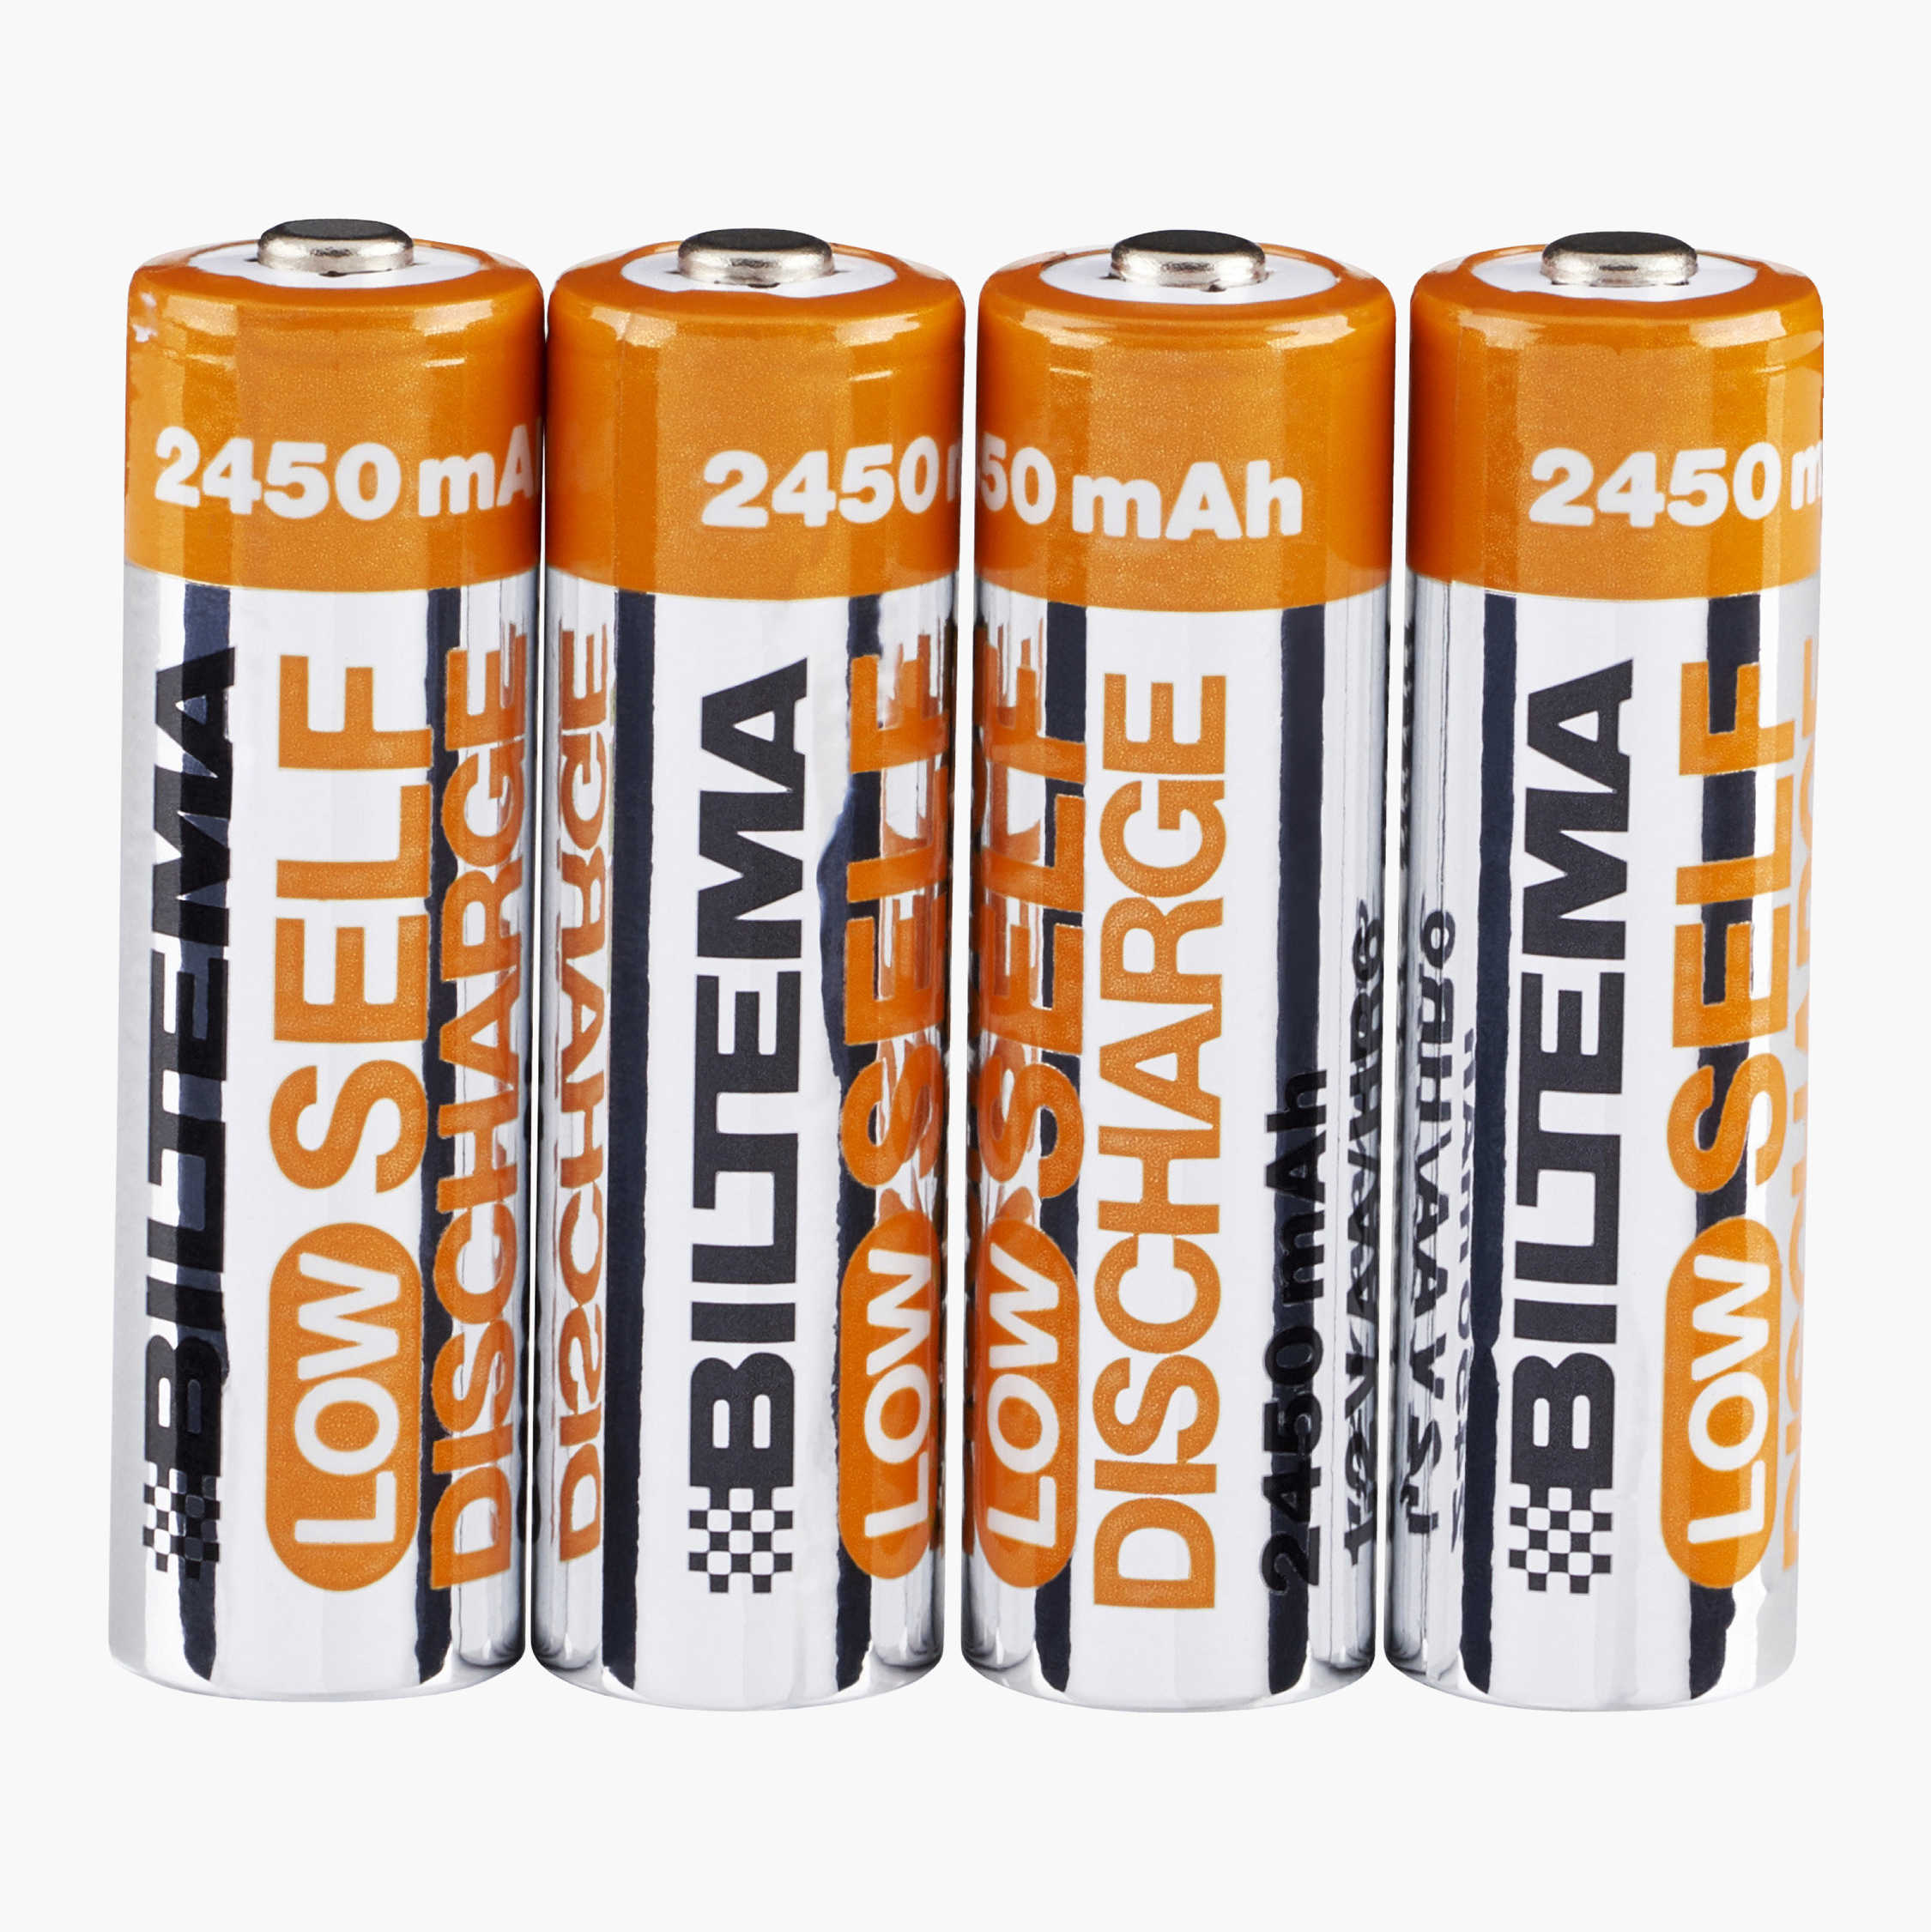 høj ineffektiv langsom Genopladeligt AA-batteri, 2450 mAh, 4 stk. - Biltema.dk